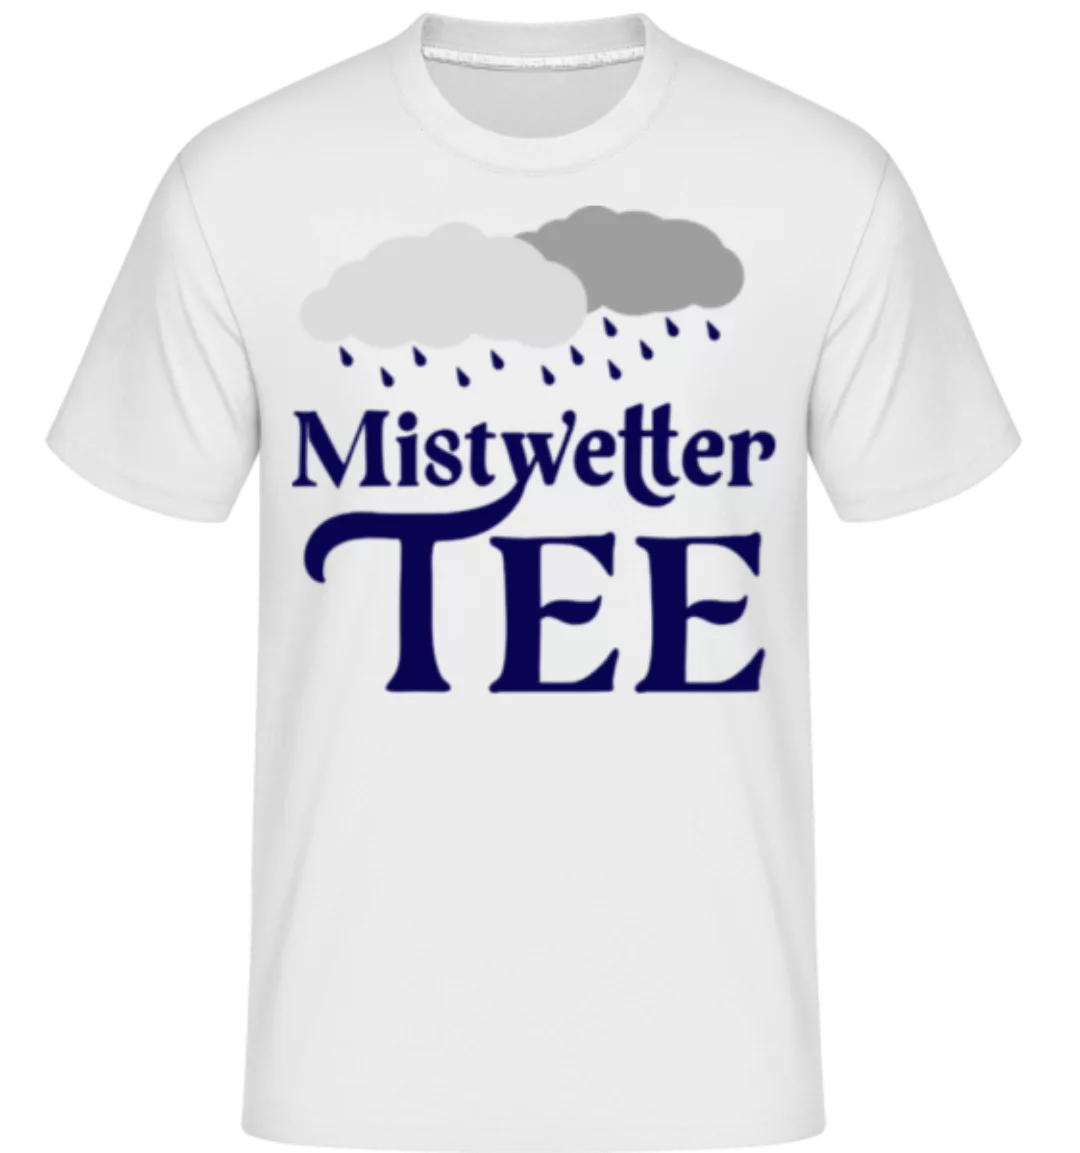 Mistwetter Tee · Shirtinator Männer T-Shirt günstig online kaufen